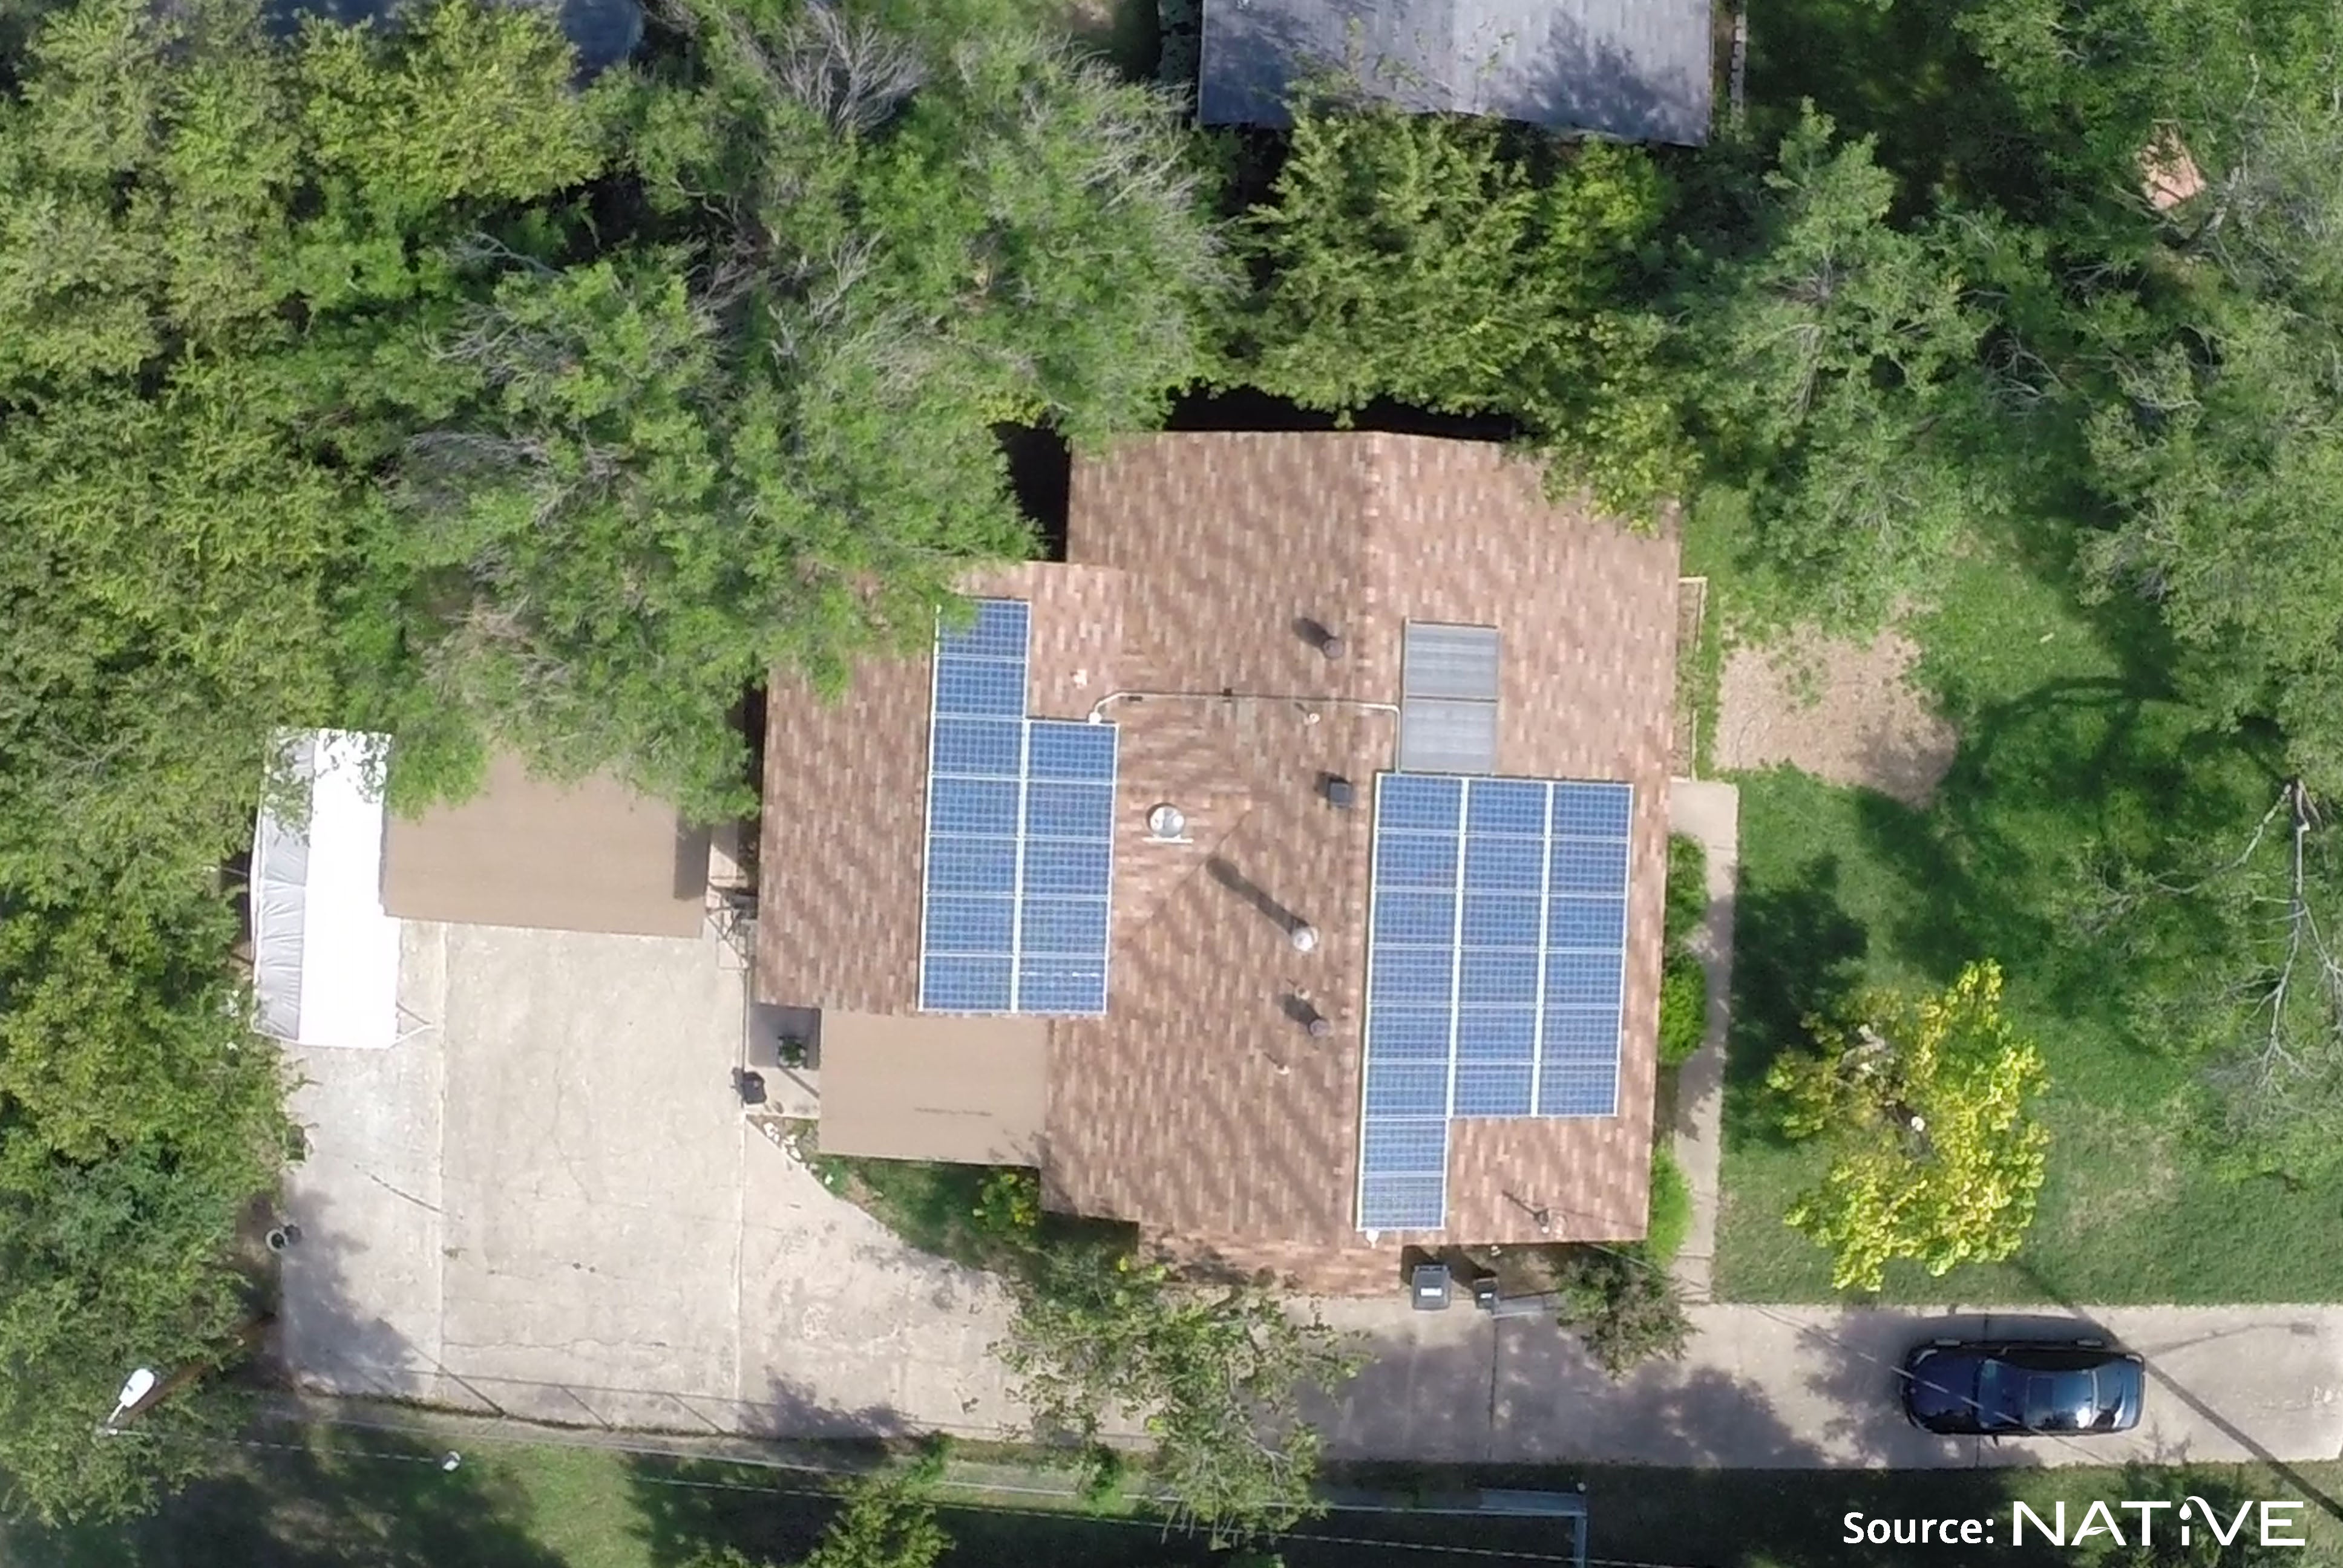 Rooftop Solar Panels